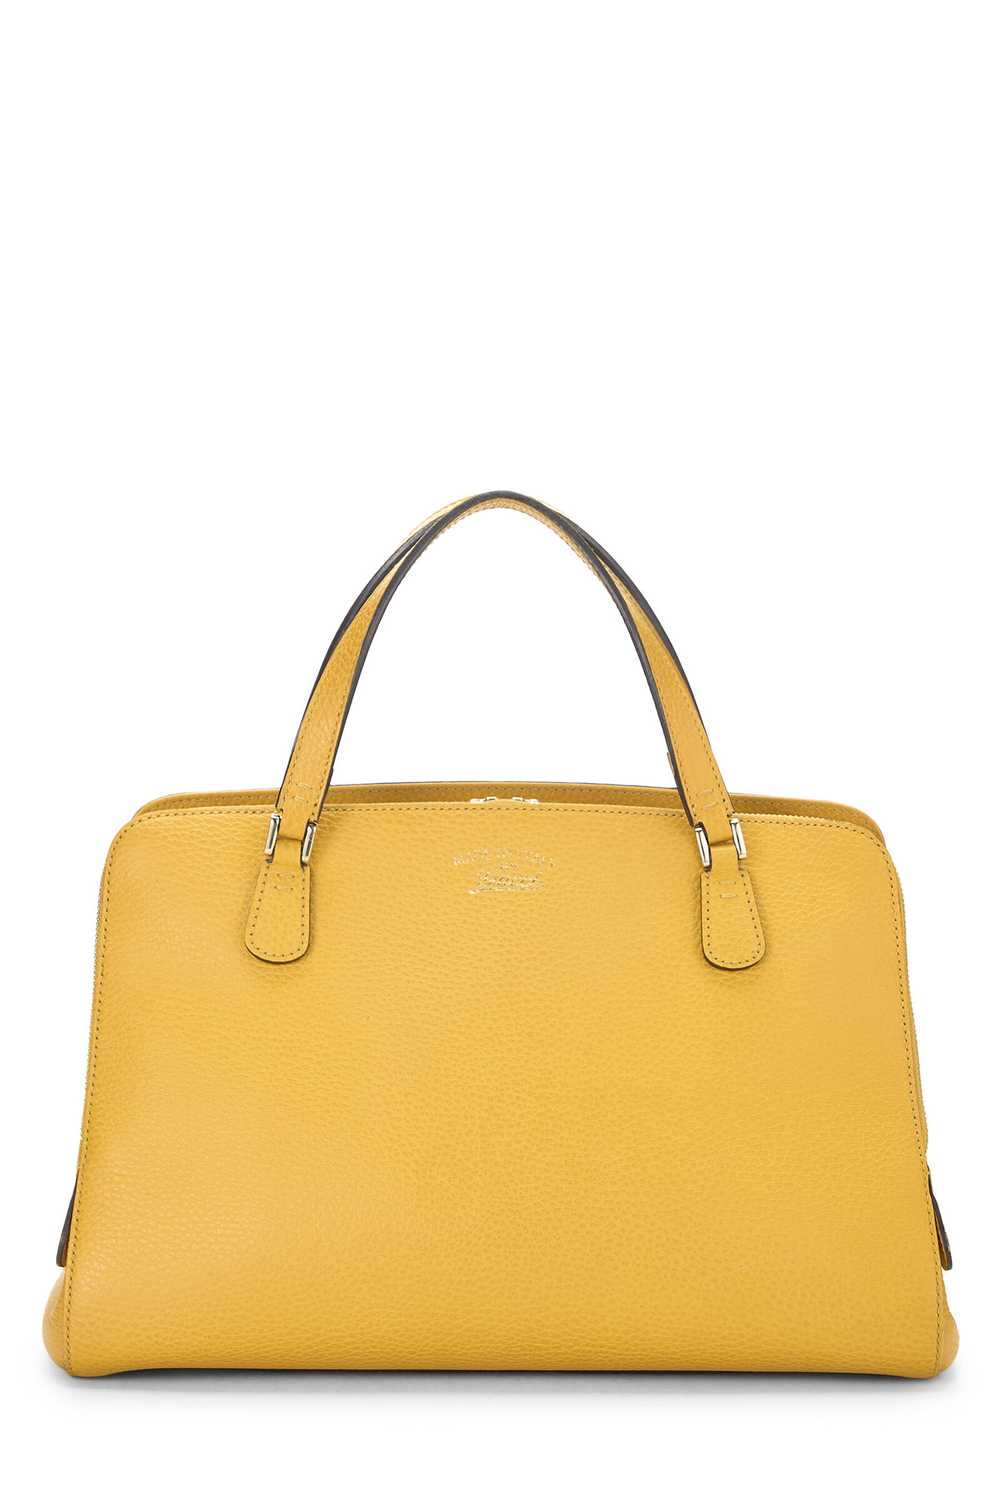 Yellow Leather Convertible Swing Top Handle Bag - image 1